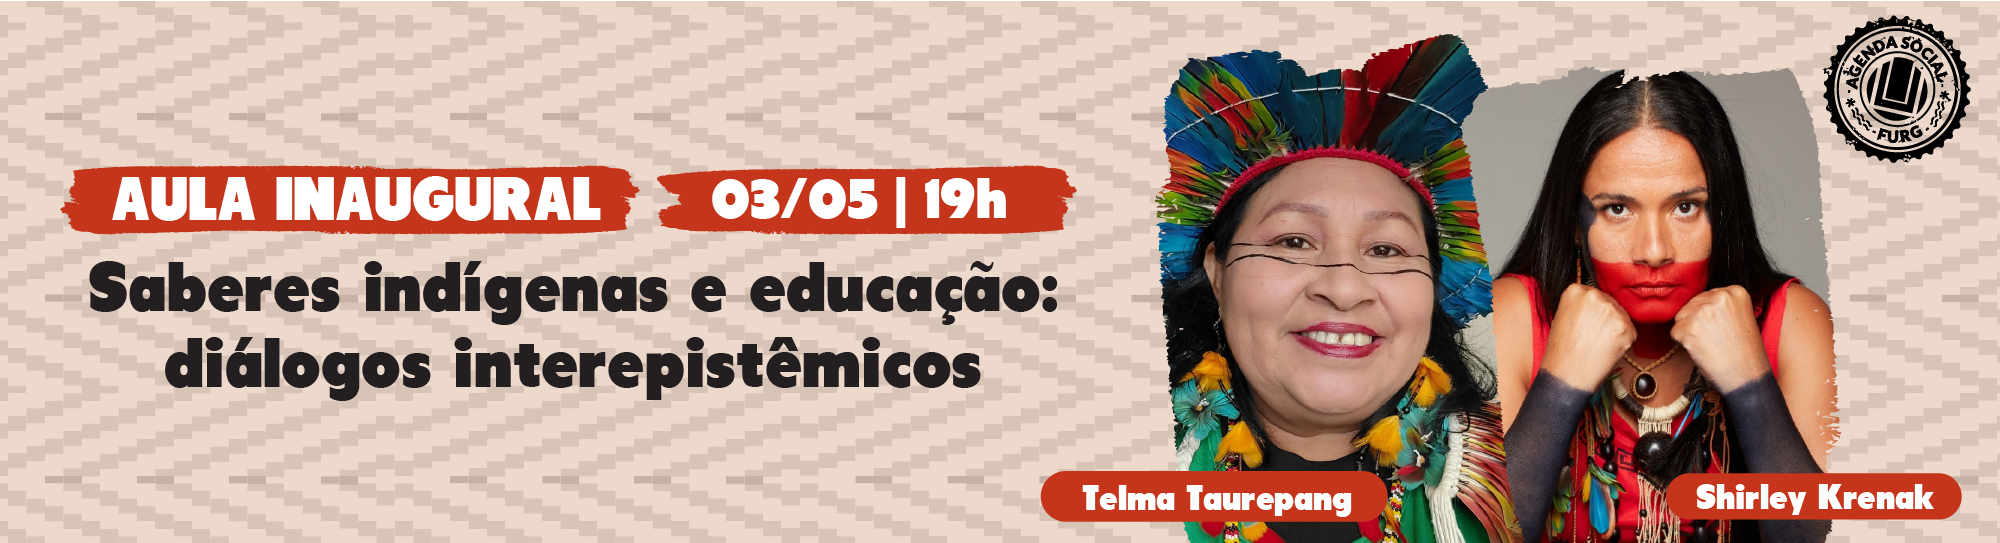 banner informativo aula inaugural 03/05/19h saberes indígenas e educação diálogos interpistêmicos Telma Taurepank, Shirley Krenak